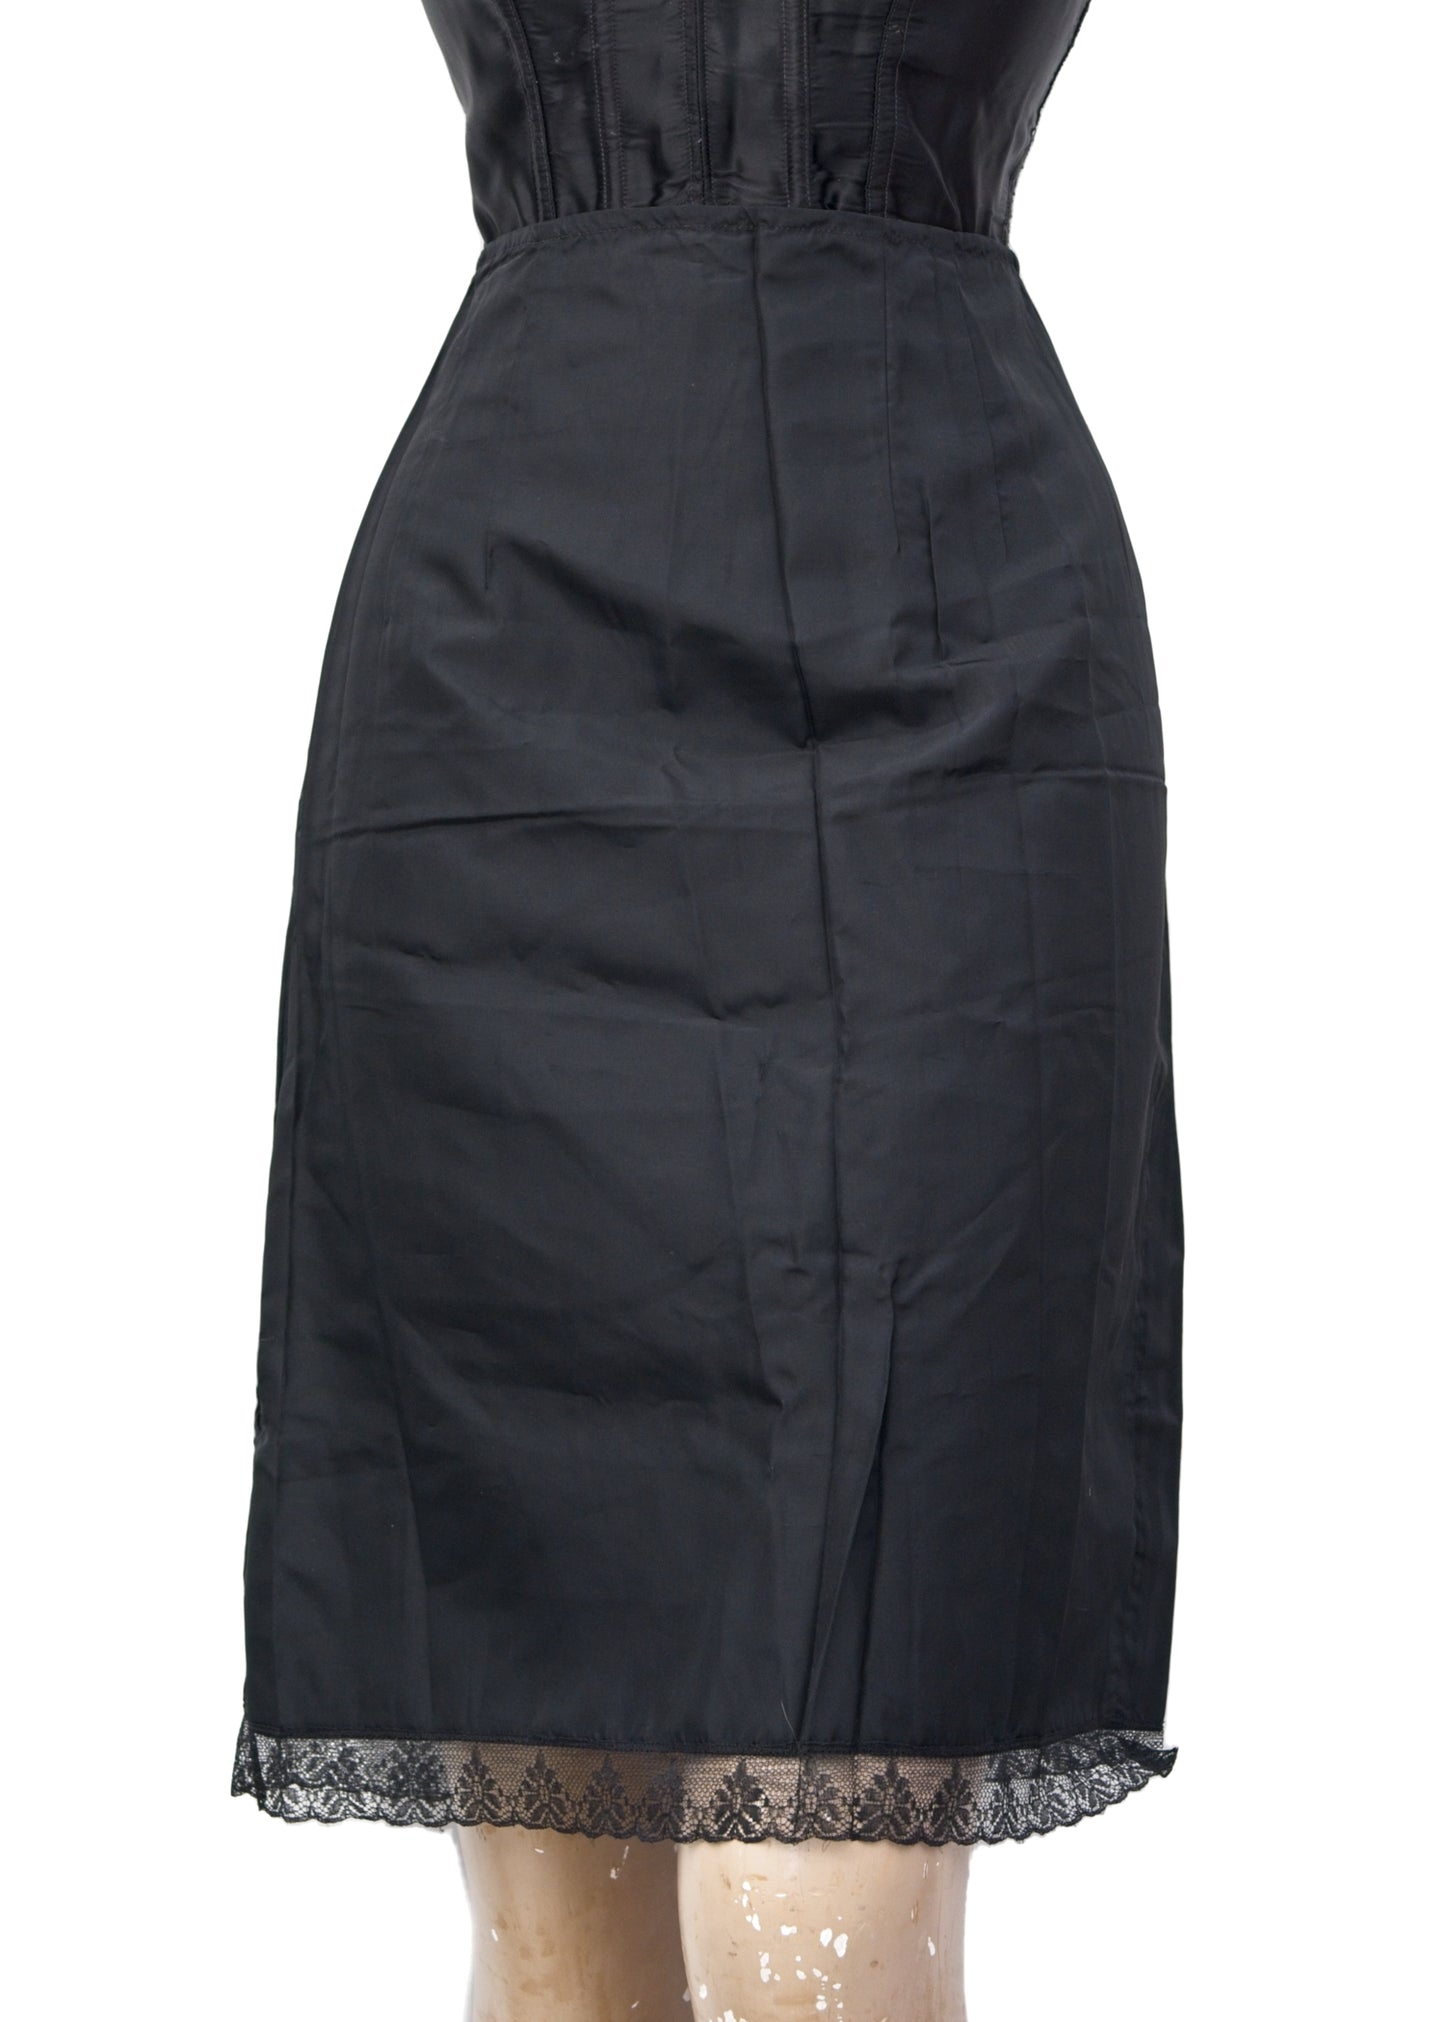 1960s Vintage Black Half Slip • Slimline for Pencil Skirt